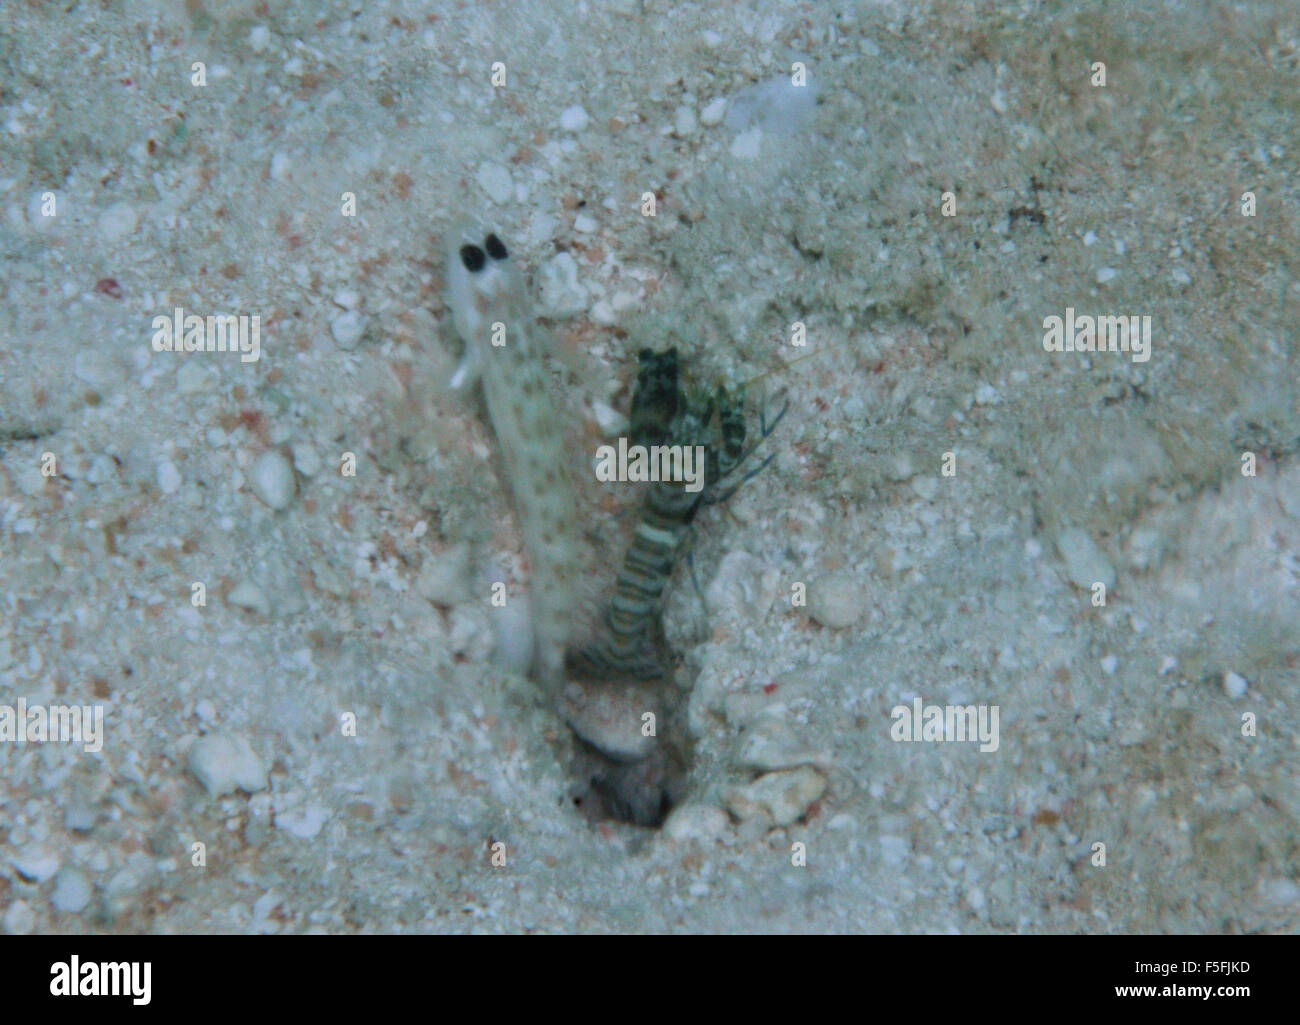 Sabbia shrimpgoby, Ctenogobiops feroculus e gamberi, Alpheus sp., Nukuione isolotto Uvea o isola di Wallis, Wallis e Futuna Foto Stock